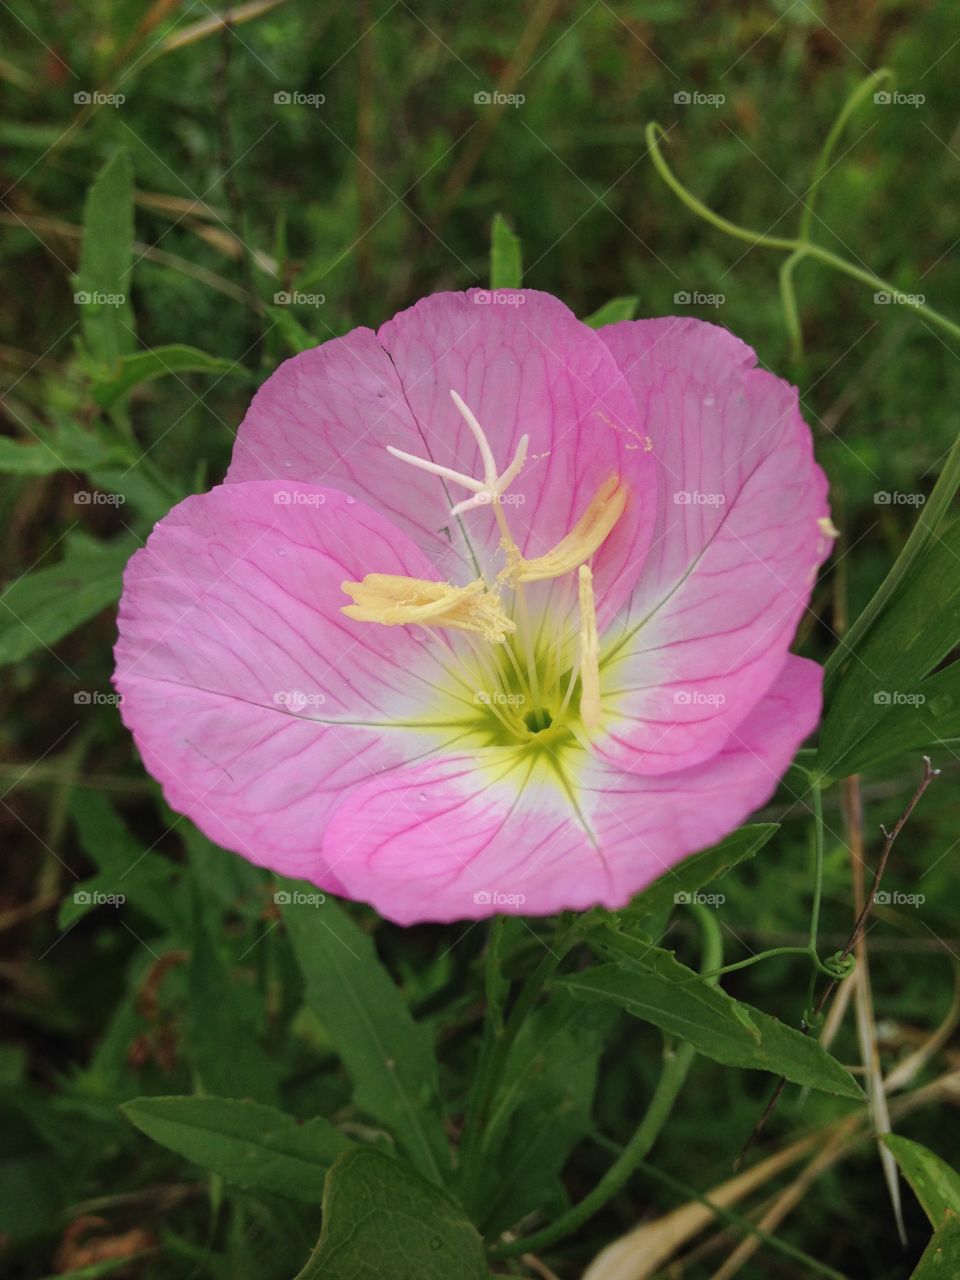 Pucker up buttercup. Pink flower in a field